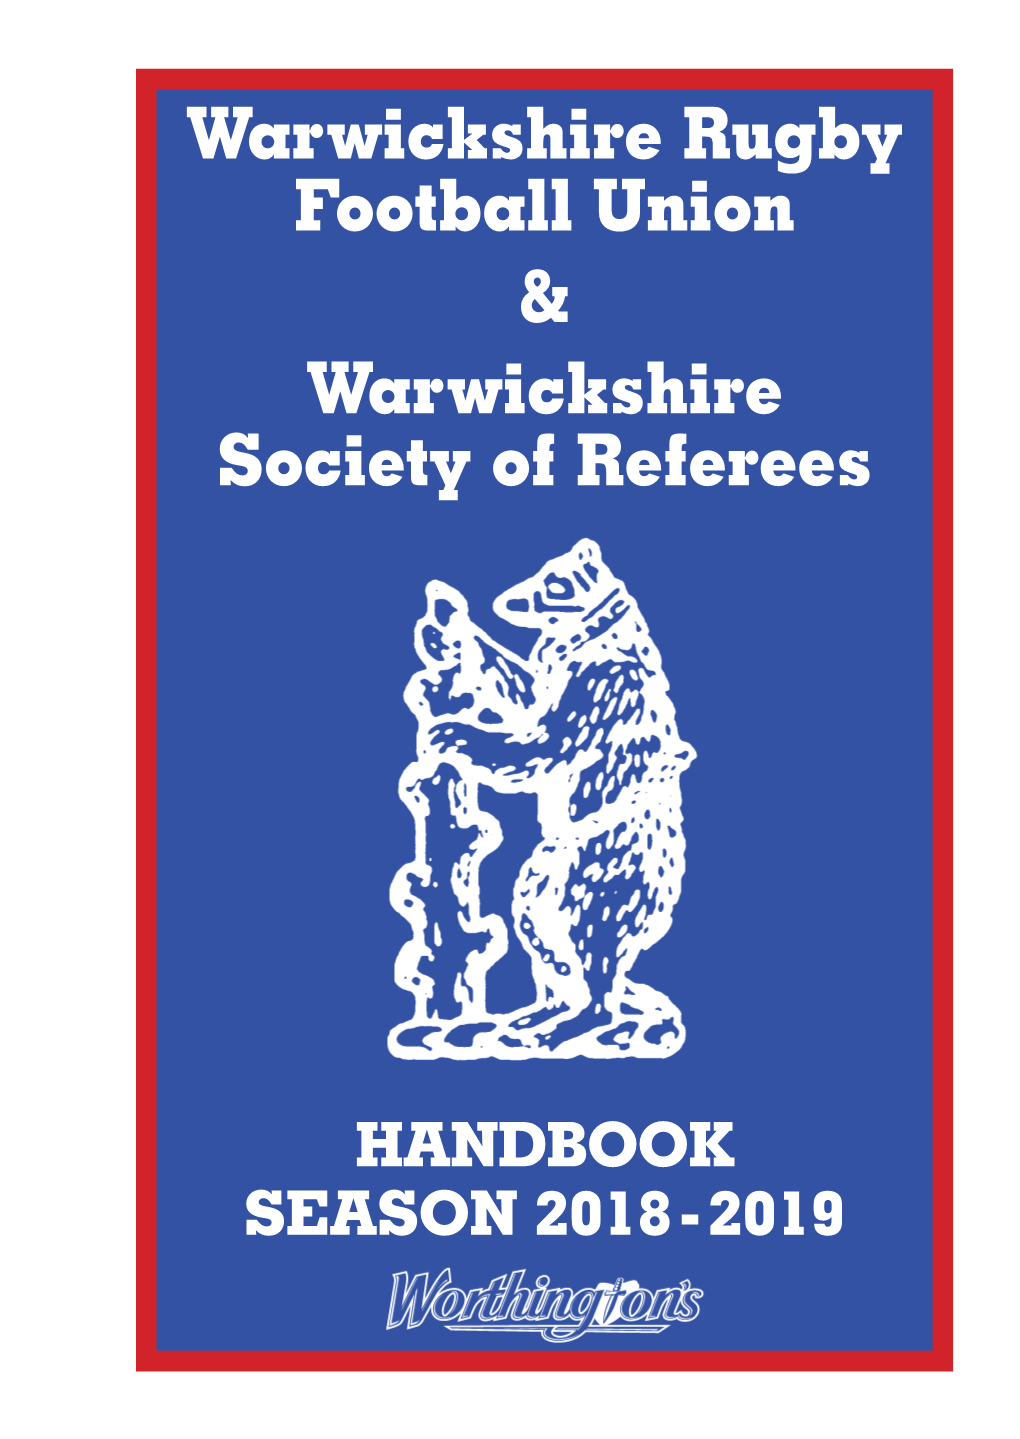 01A WRFU Handbook 2017-18 ADVERTS FRONT